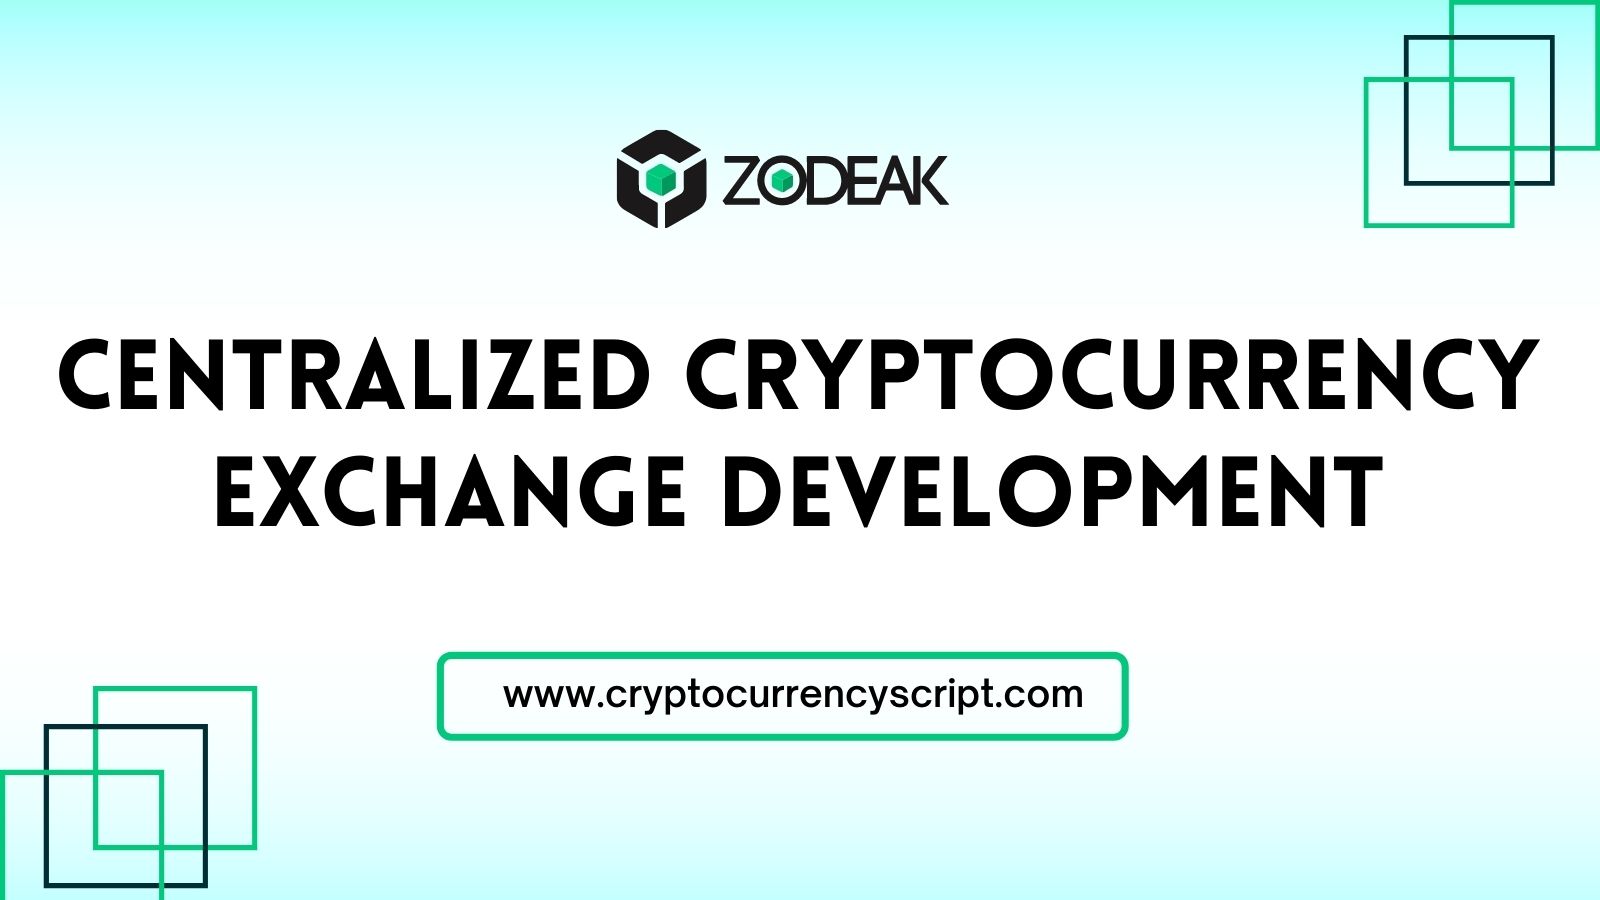 Centralized Cryptocurrency Exchange Development Company | Zodeak